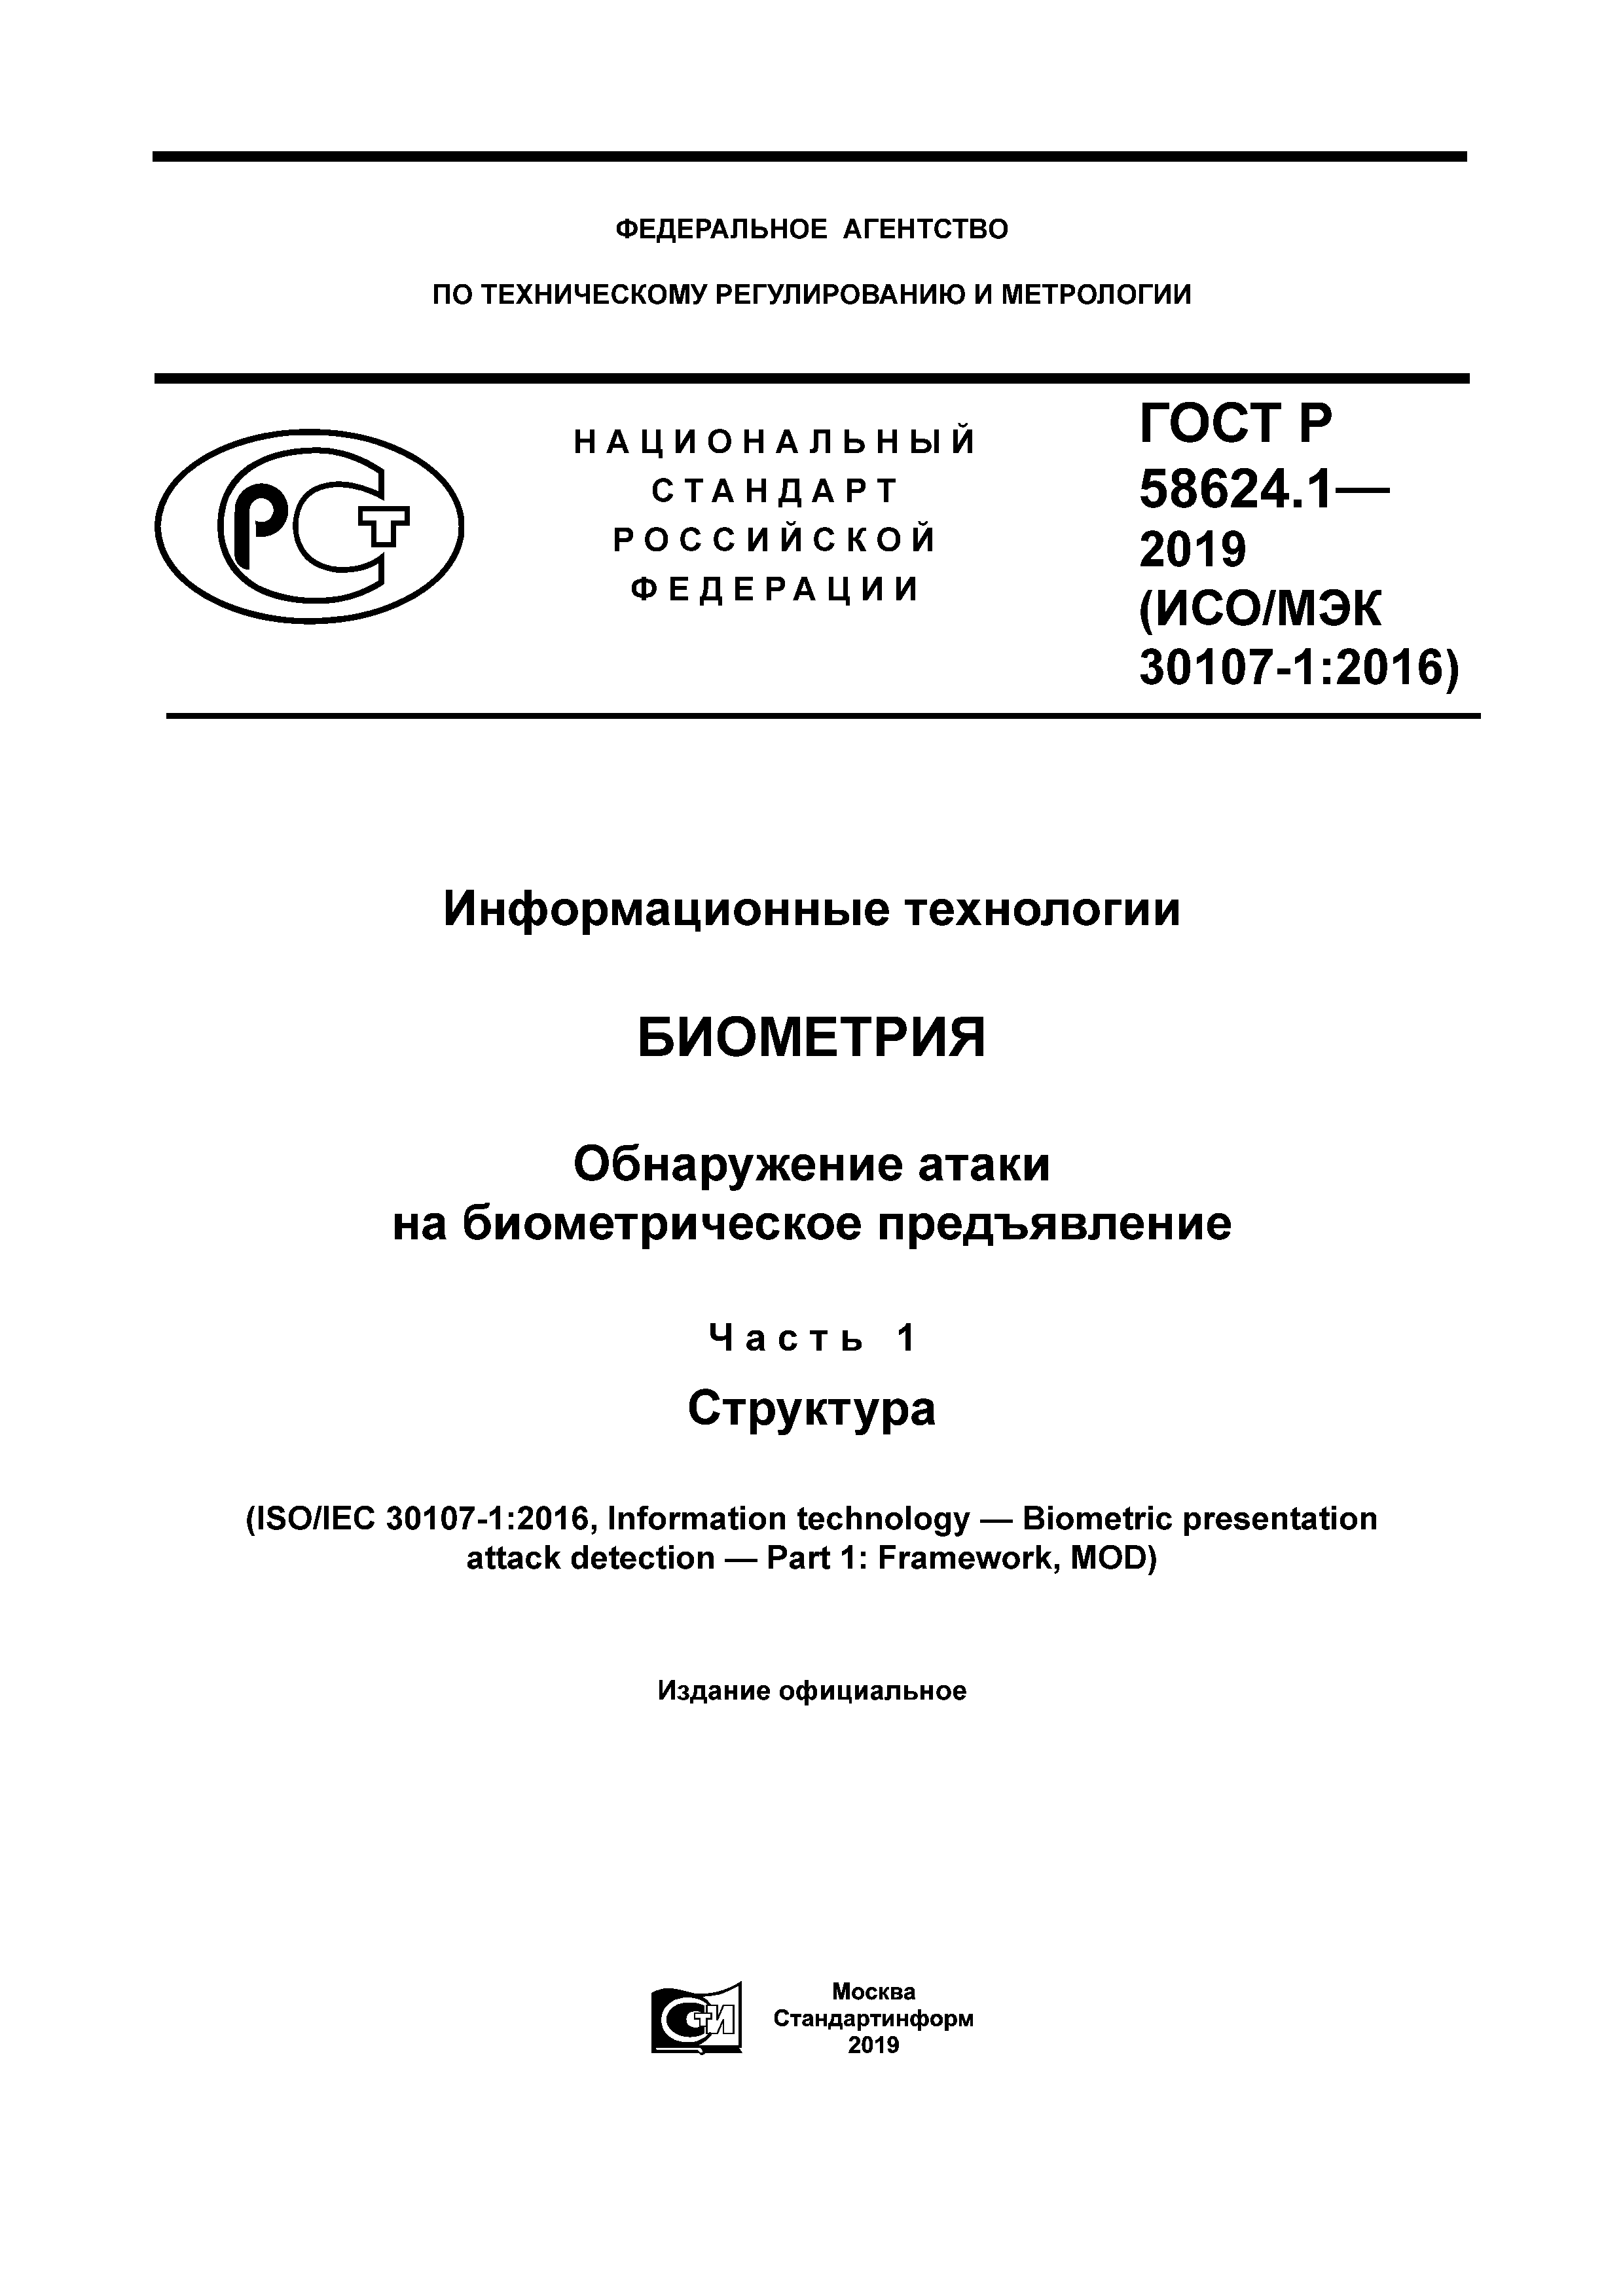 ГОСТ Р 58624.1-2019